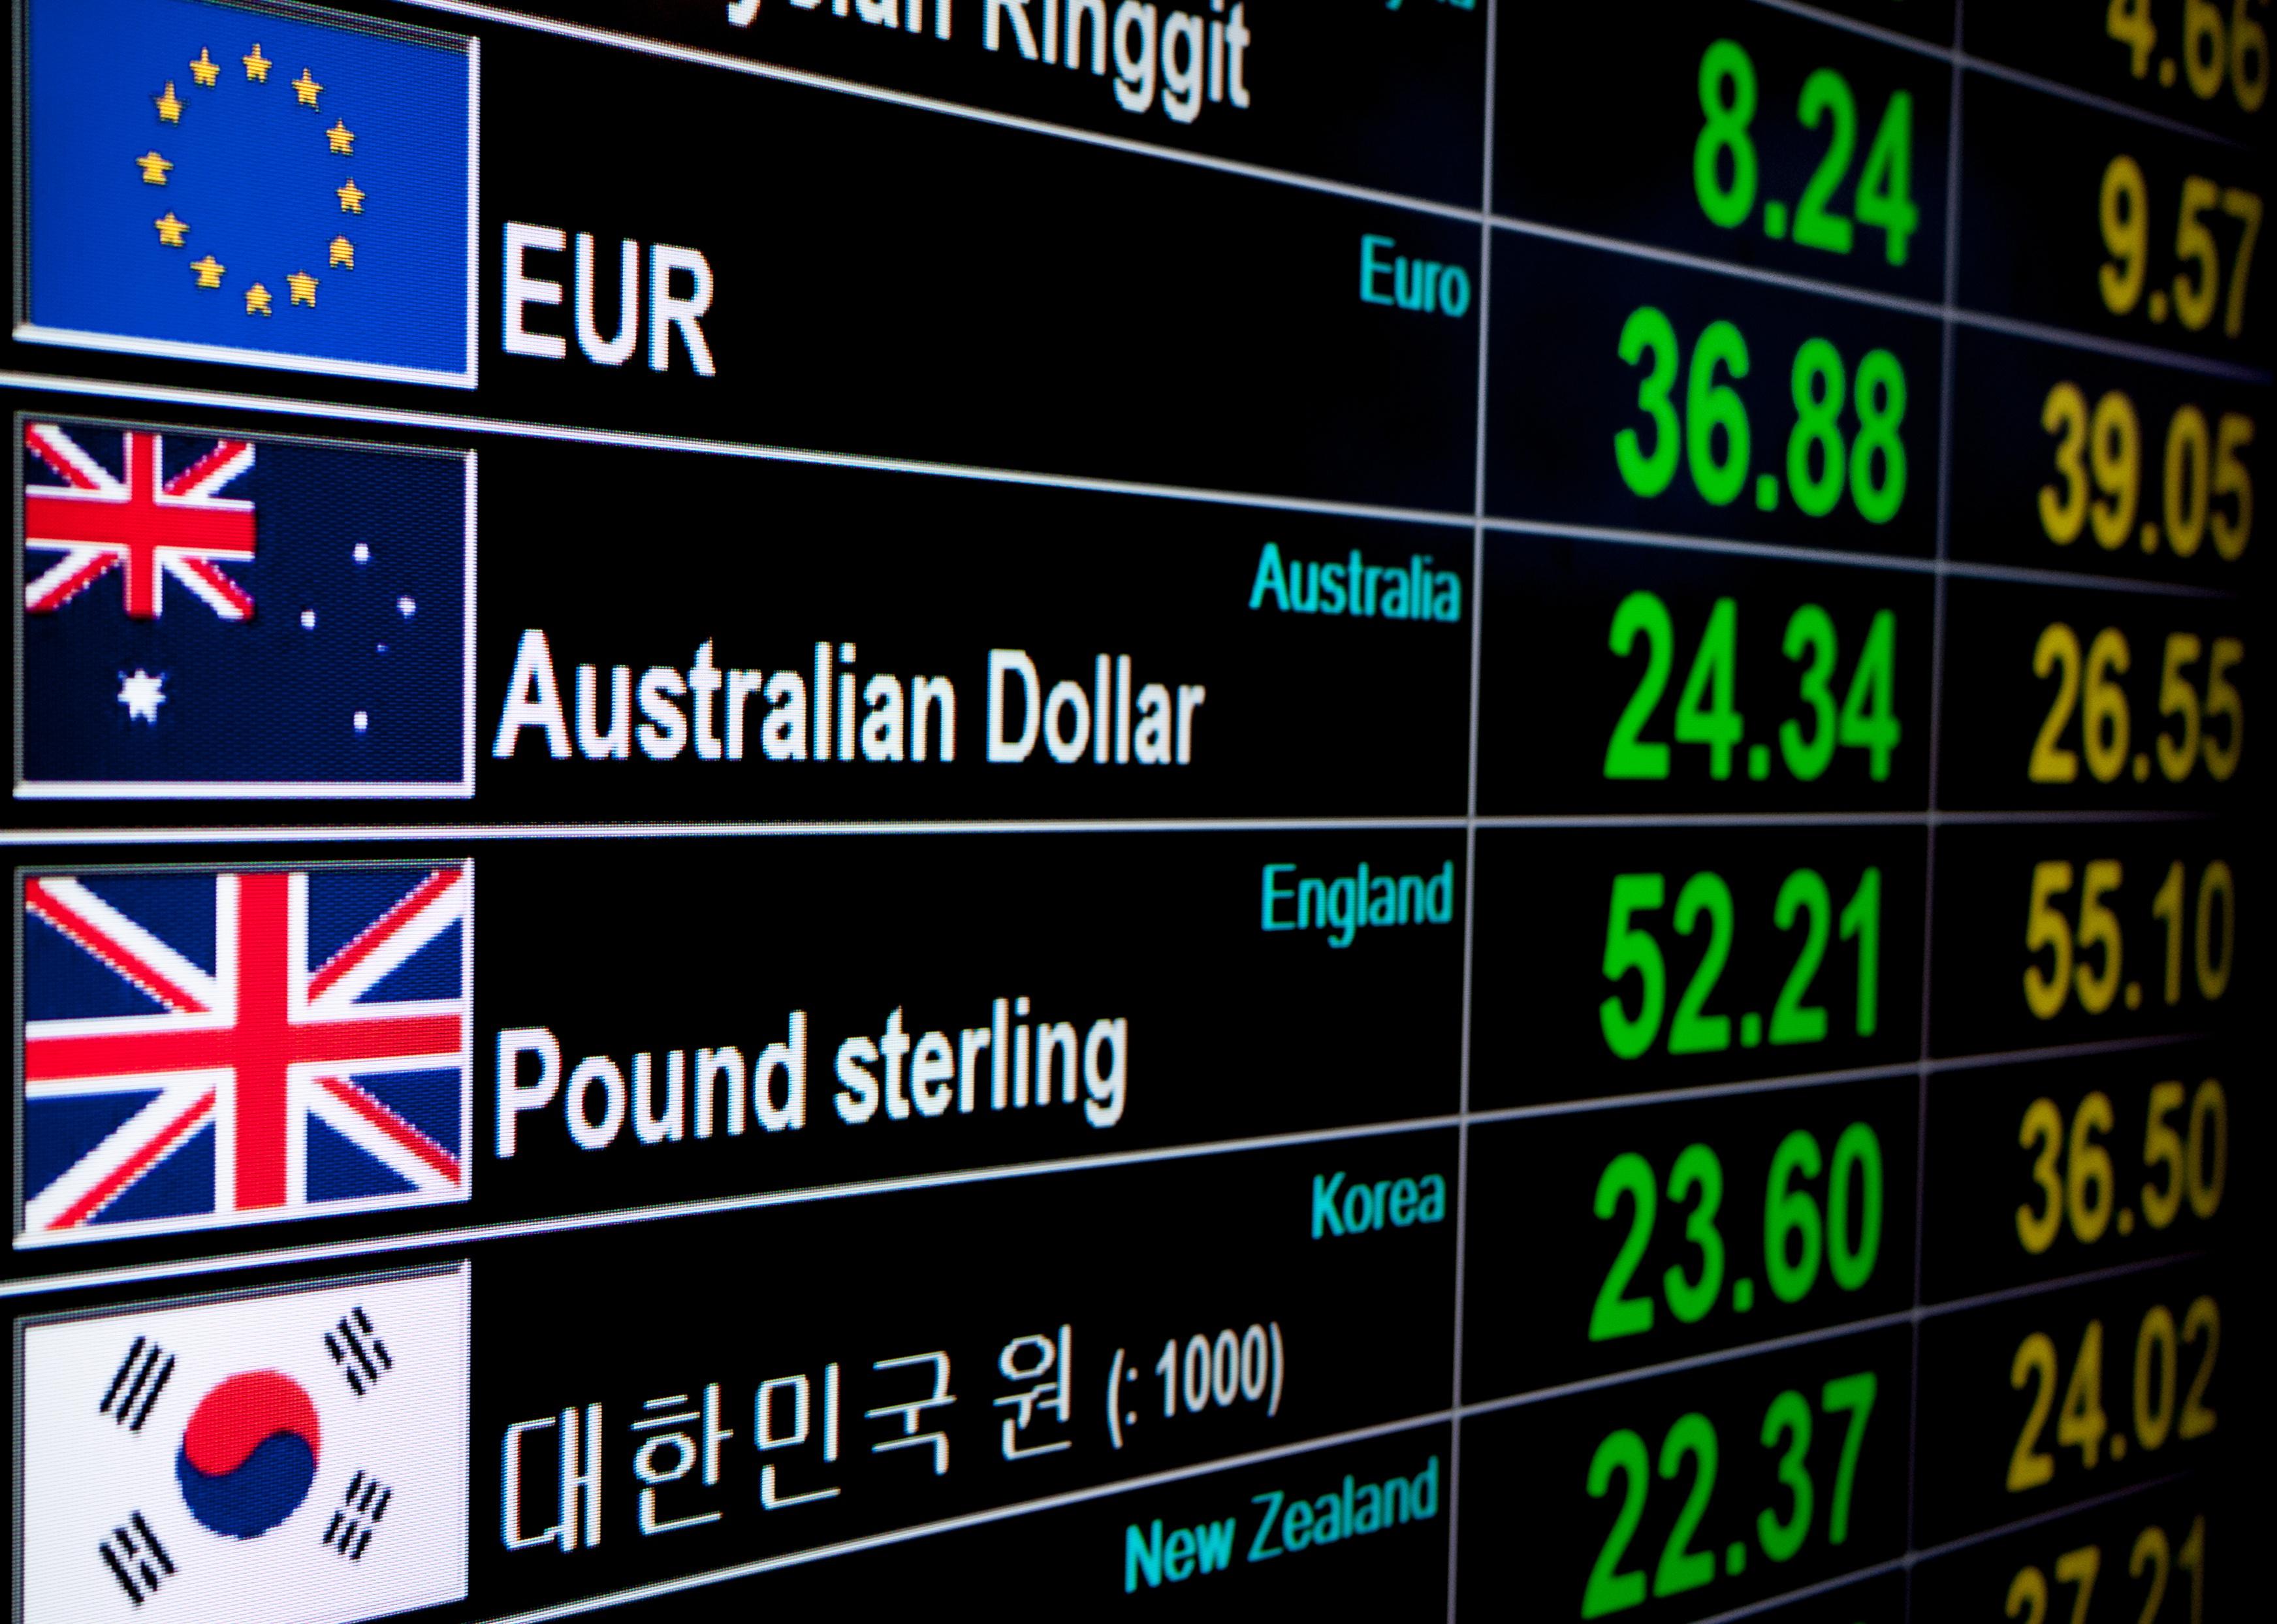 Currency exchange rate on digital LED display board